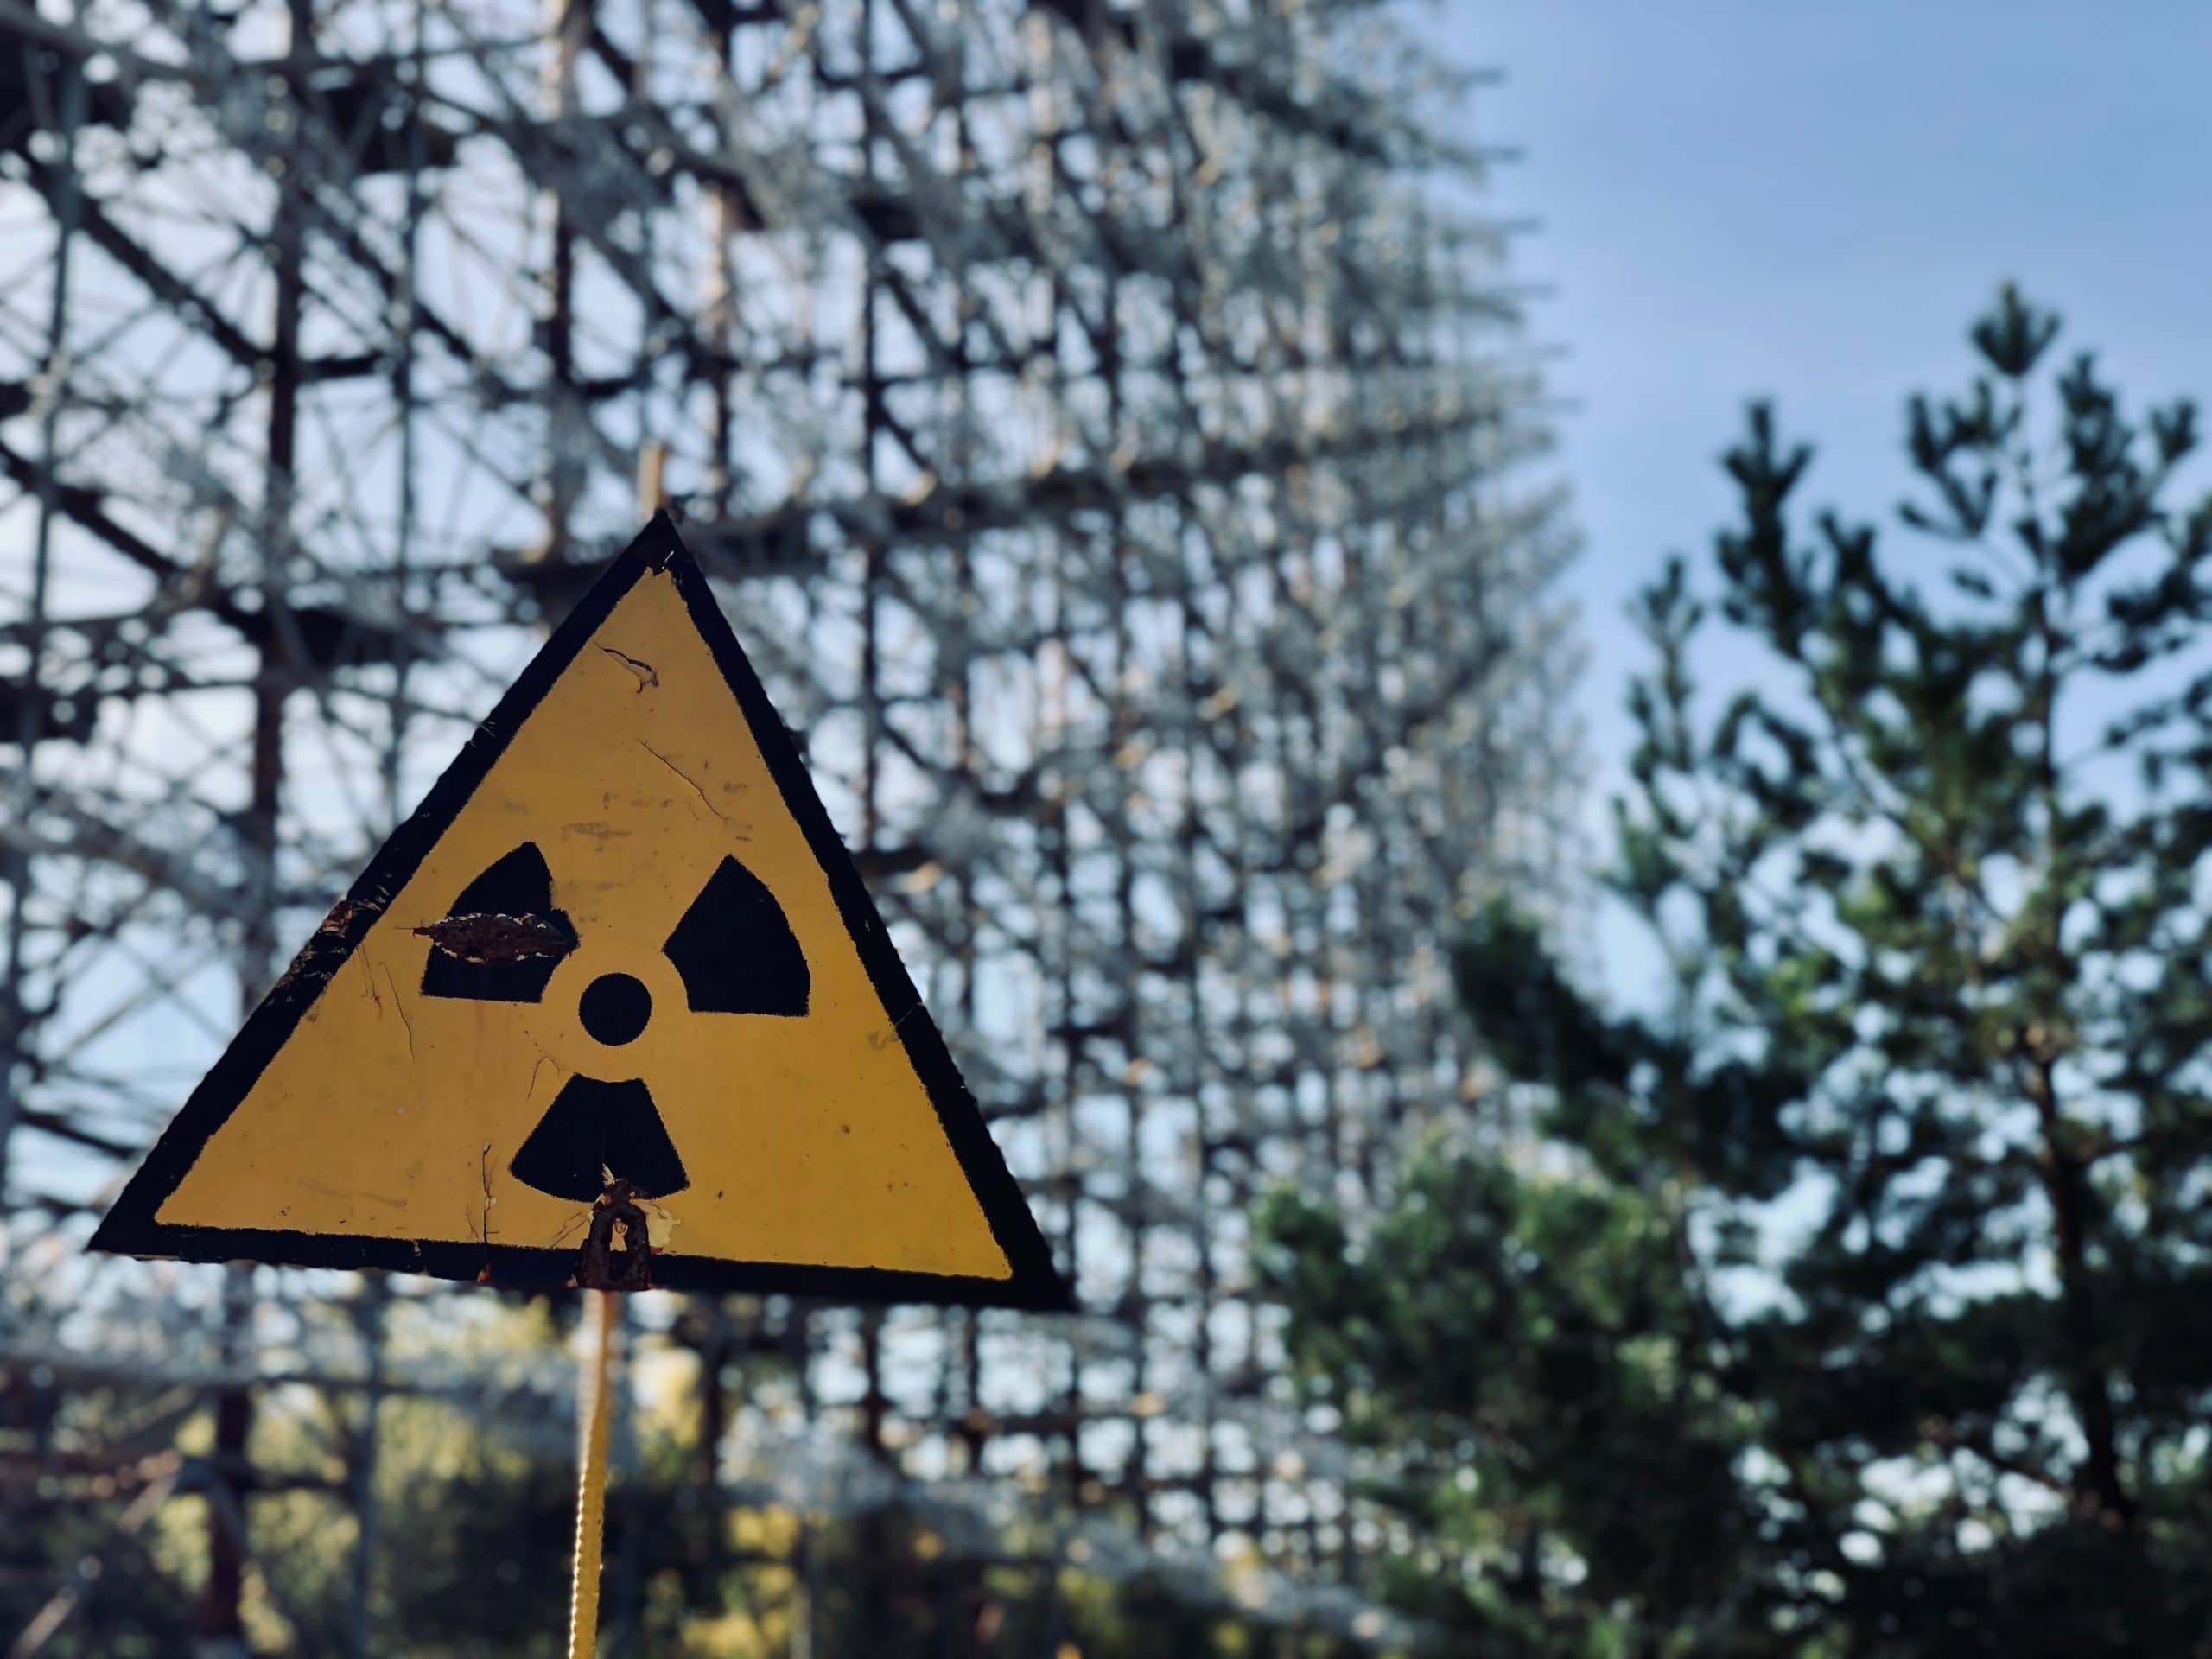 mediakeys not working in call of chernobyl